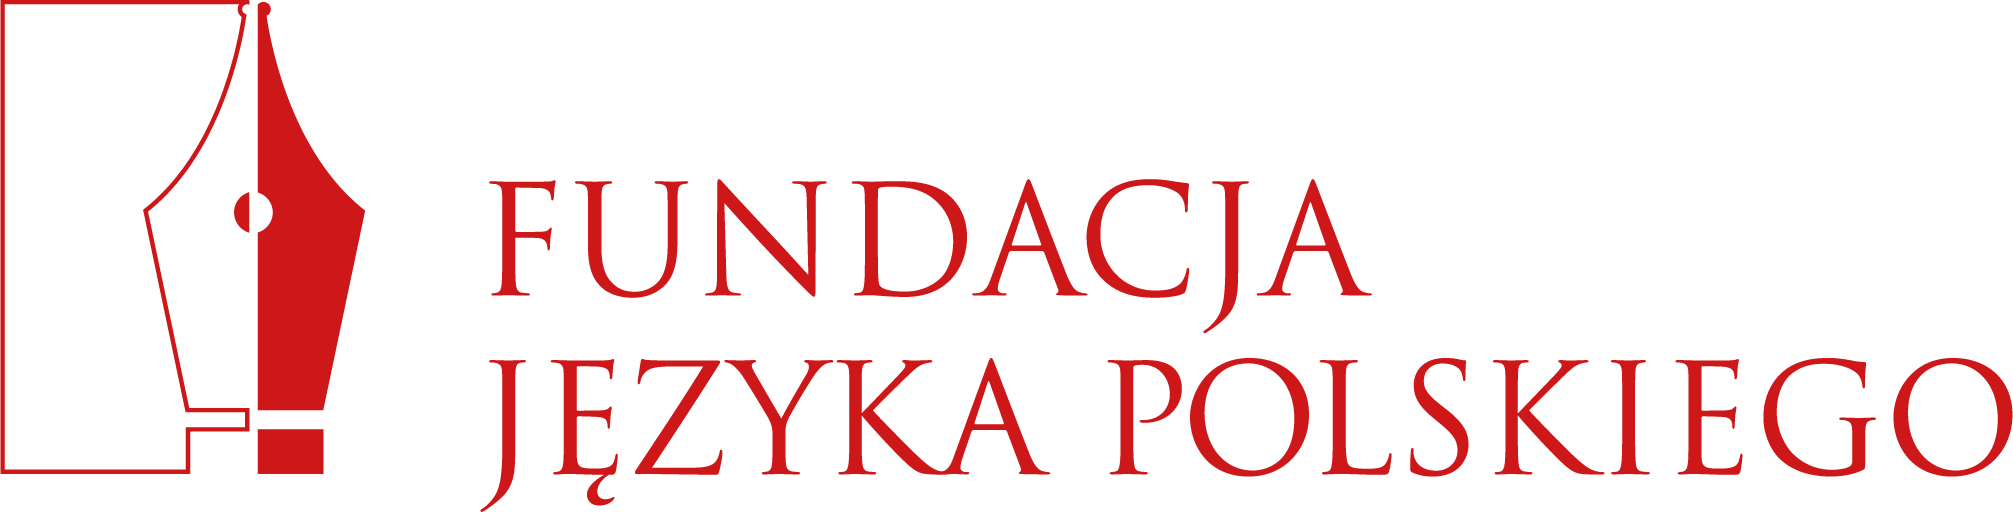 FJP_logo